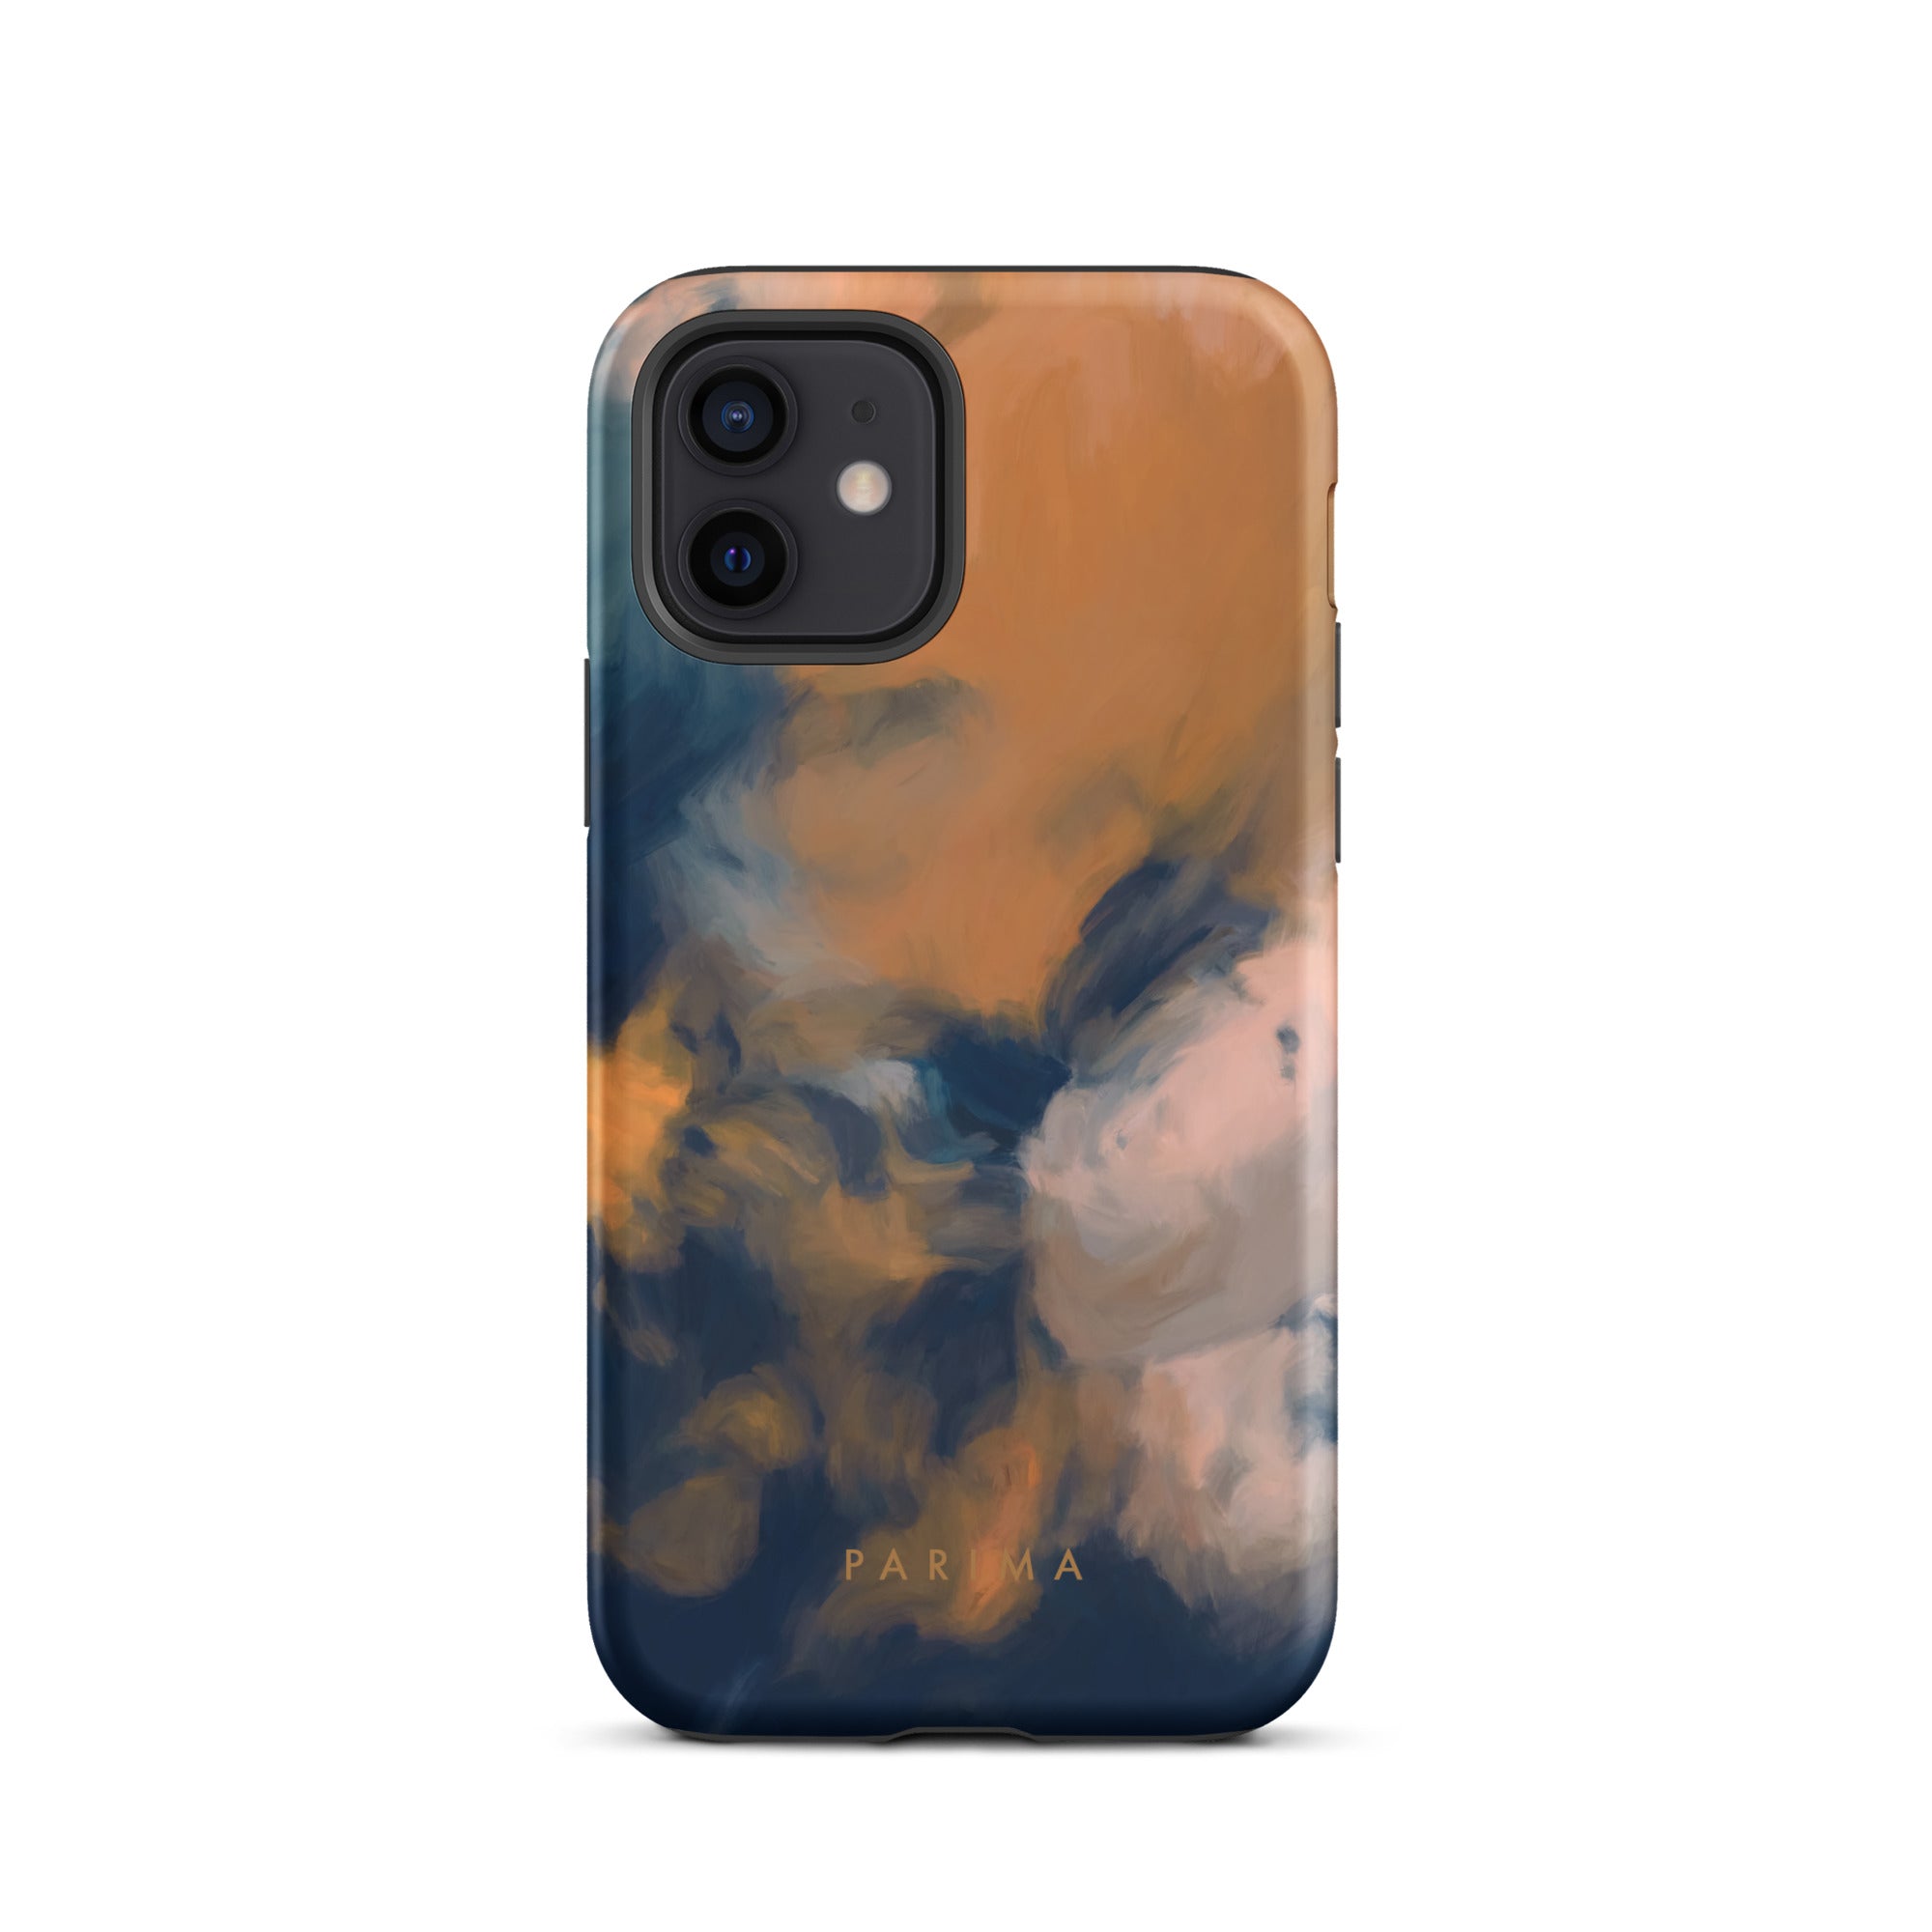 Mia Luna, blue and orange abstract art - iPhone 12 tough case by Parima Studio